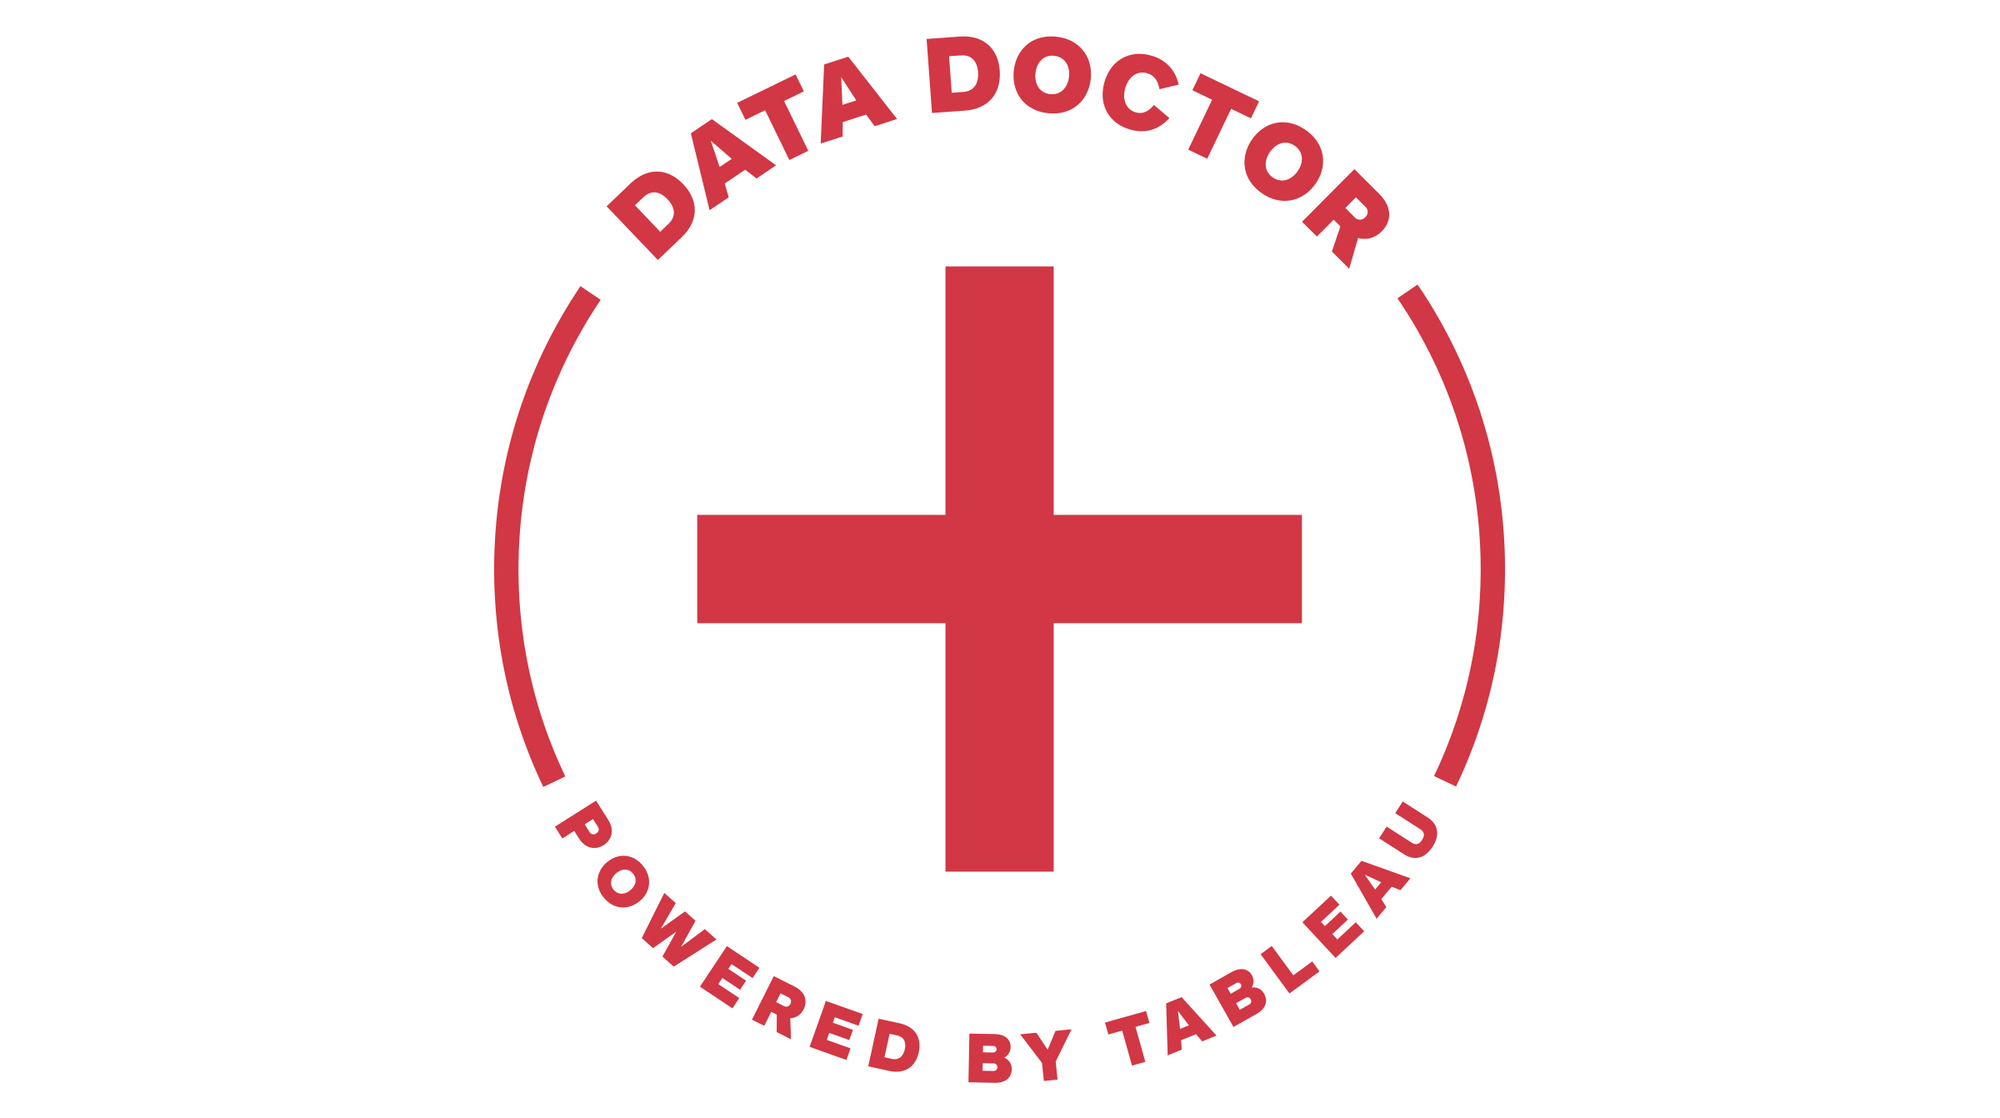 Navigate to Verktygslåda: Data-doktor